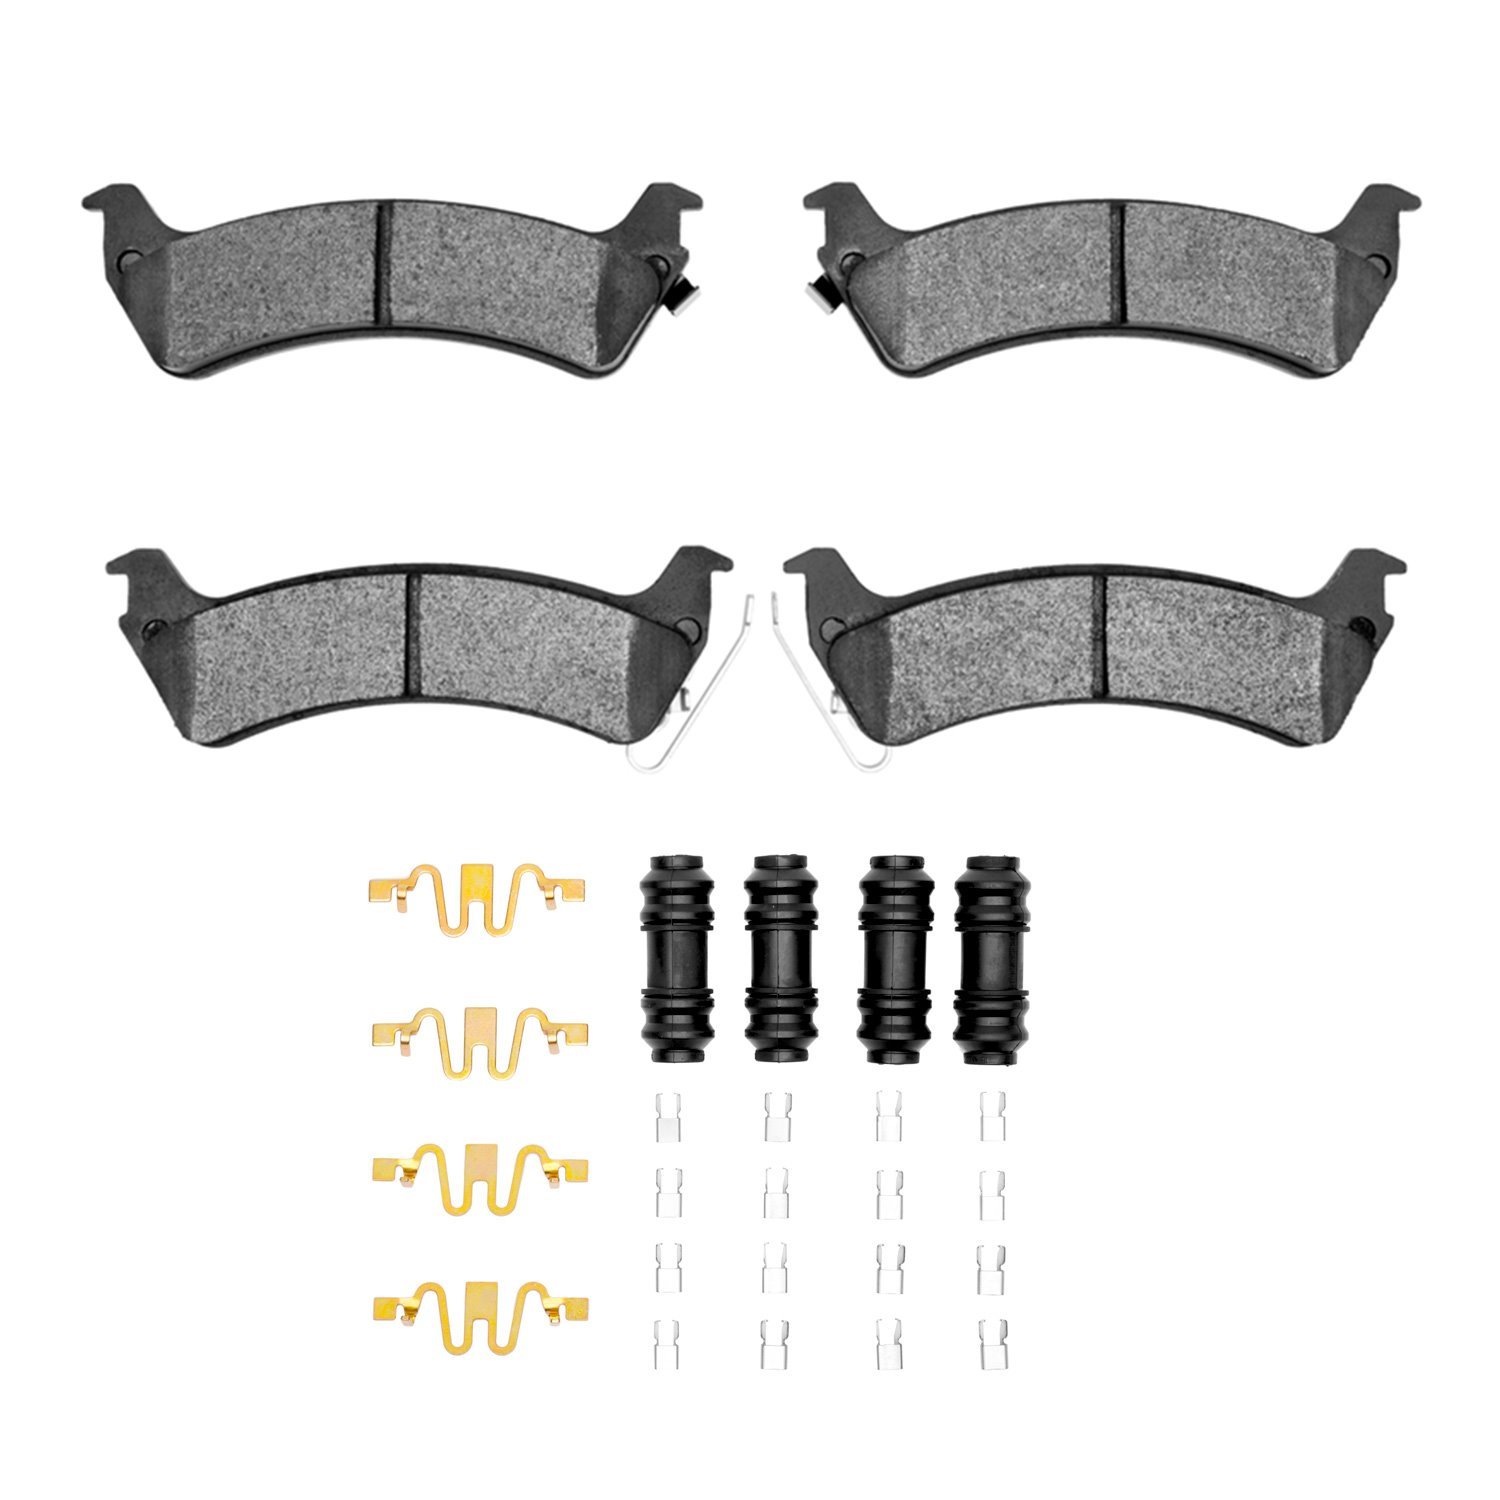 1310-0666-01 3000-Series Ceramic Brake Pads & Hardware Kit, 1993-1998 Mopar, Position: Rear